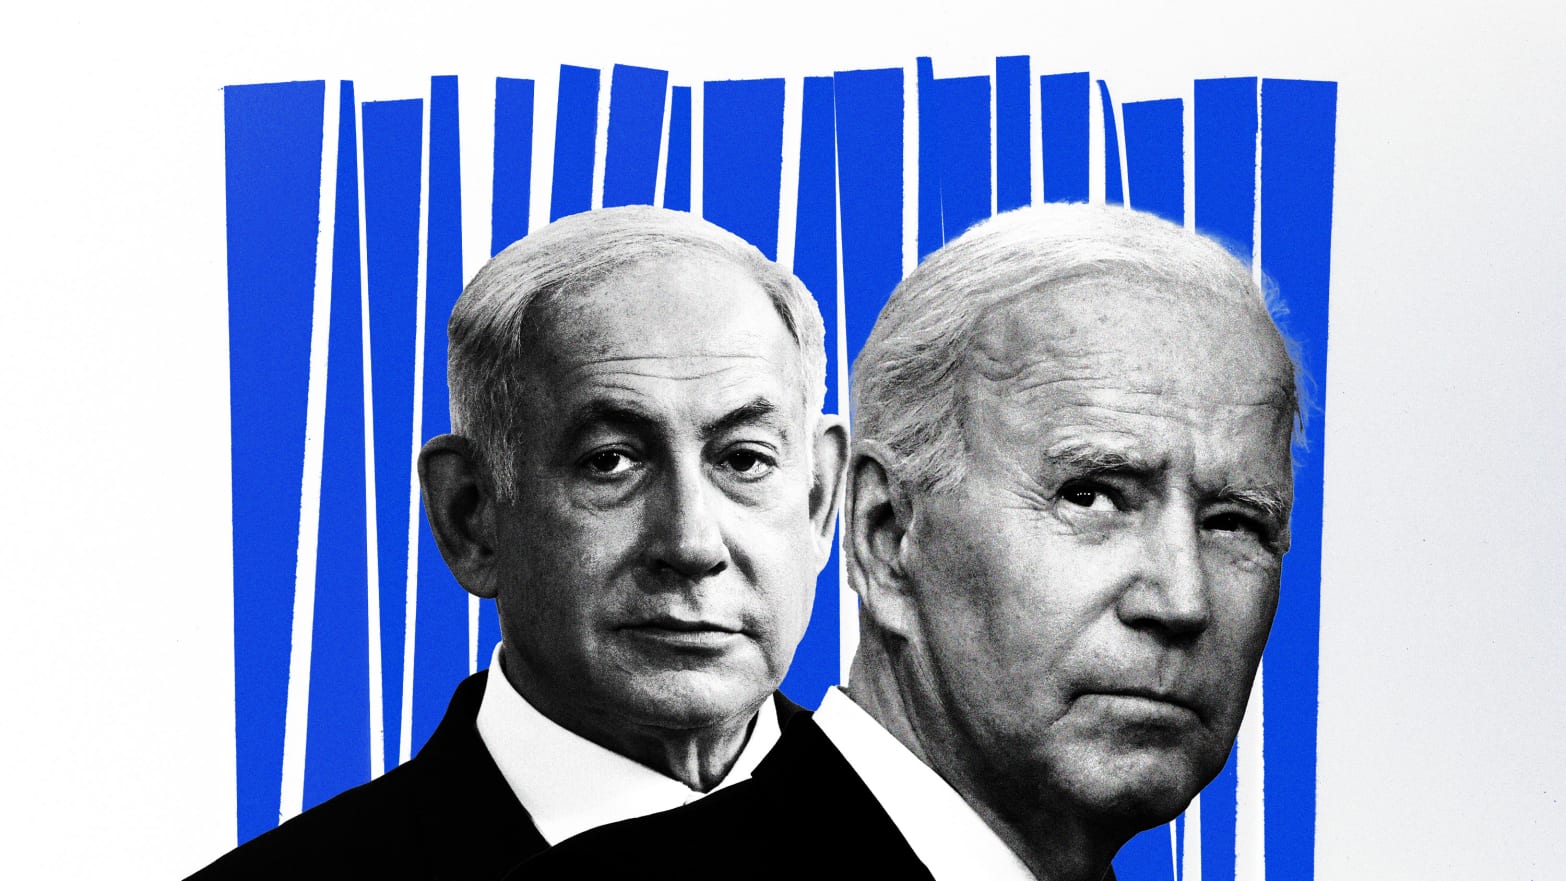 An illustration including Prime Minister Benjamin Netanyahu and U.S President Joe Biden